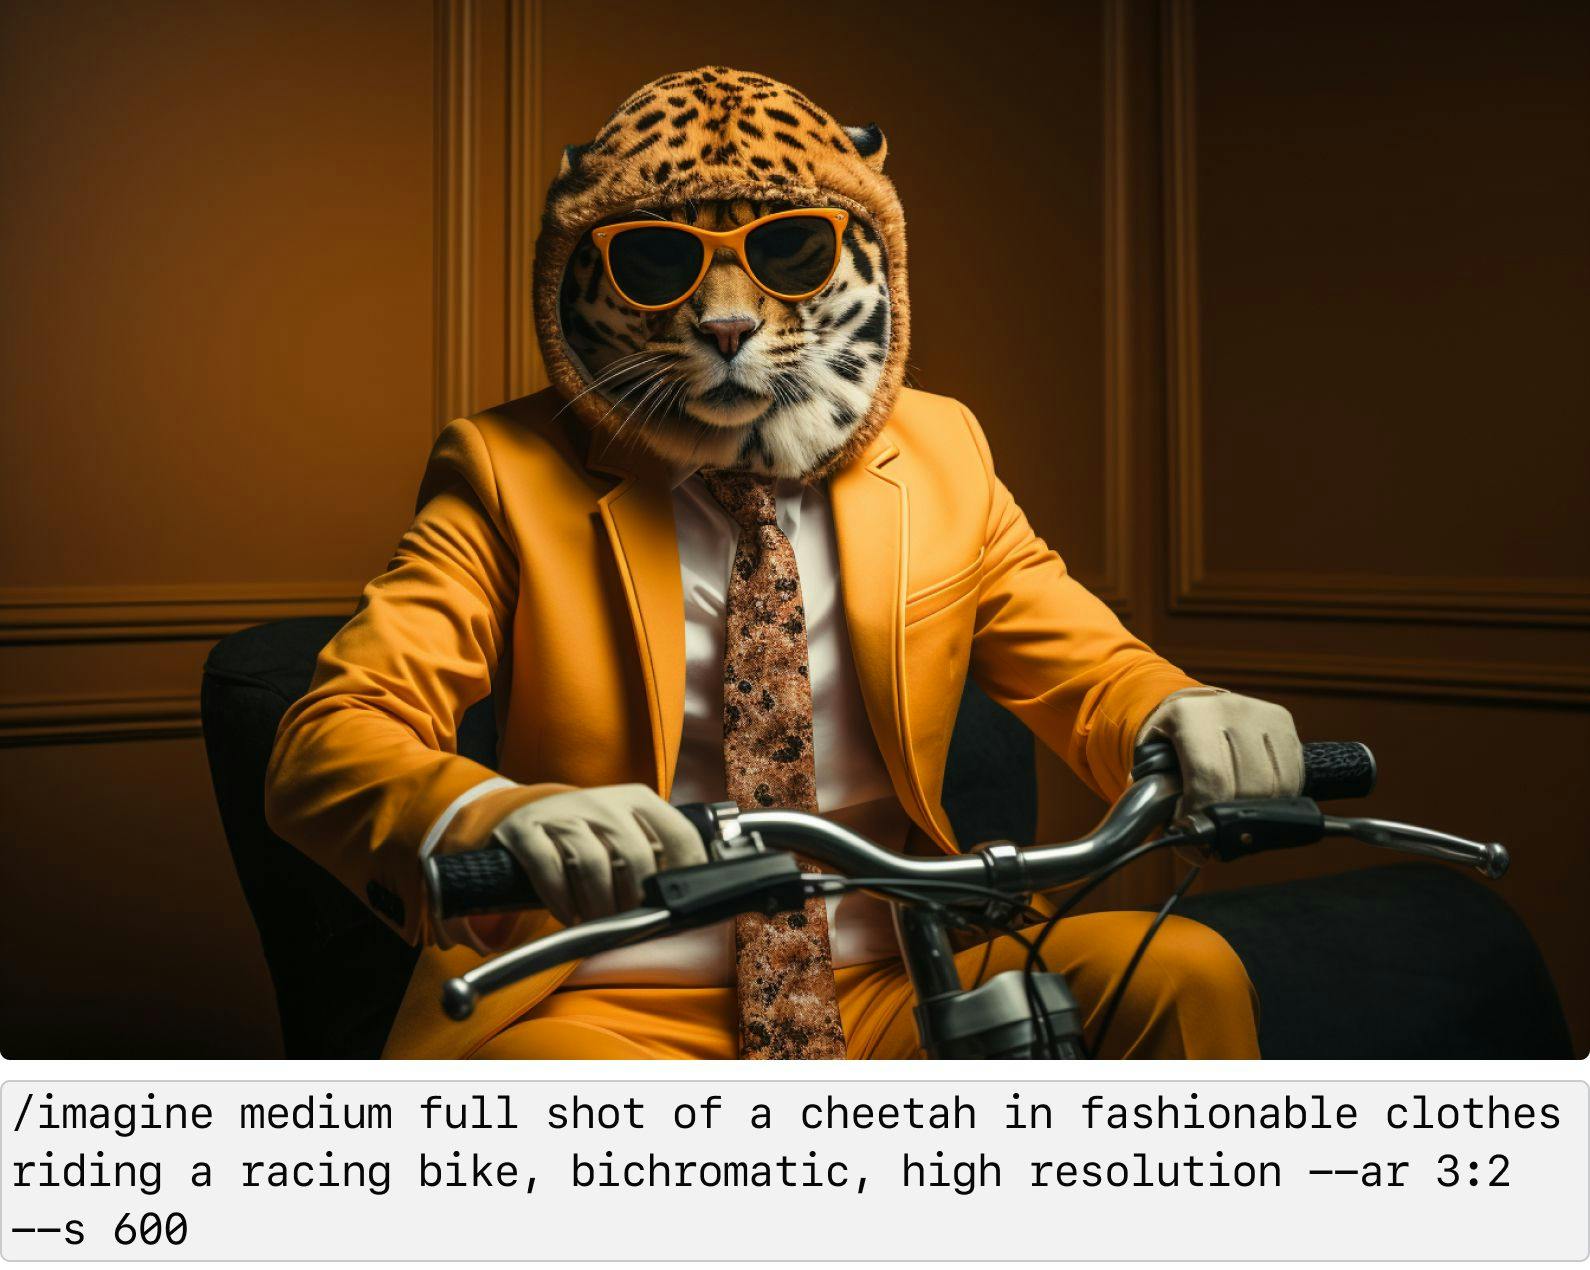 a cheetah in fashionable clothes riding a racing bike